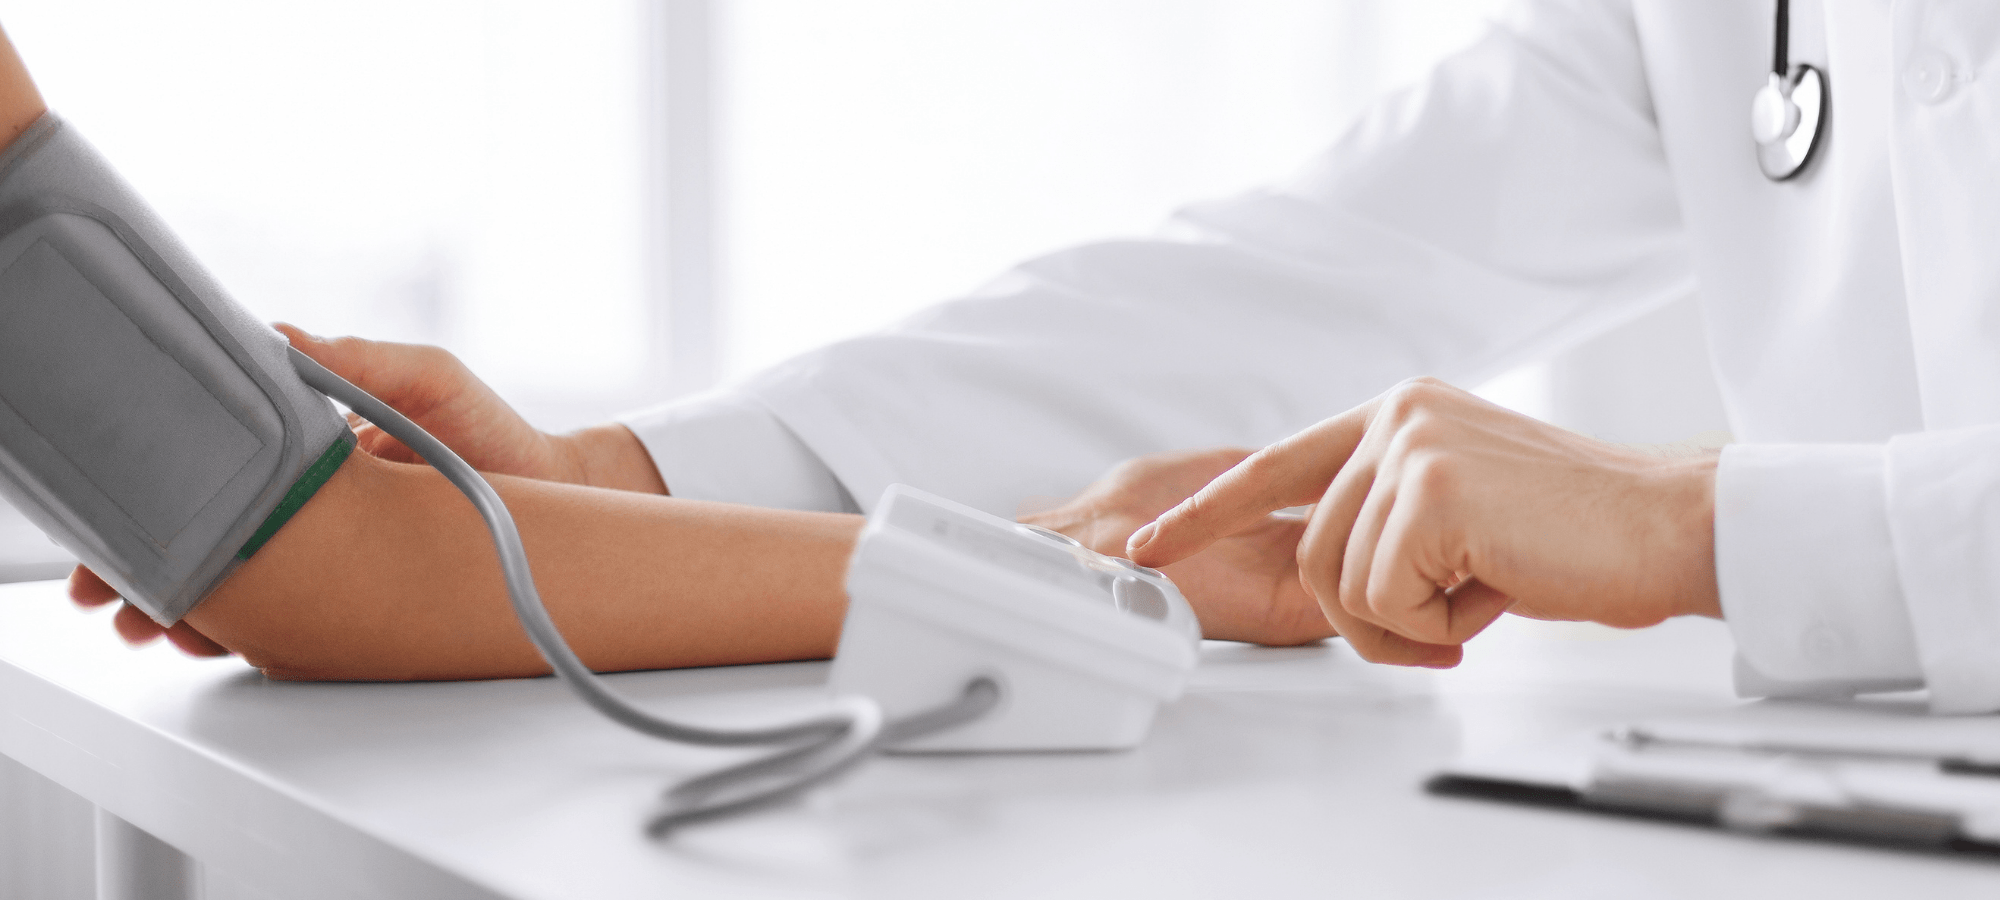 blood pressure screening leicdester nuneaton